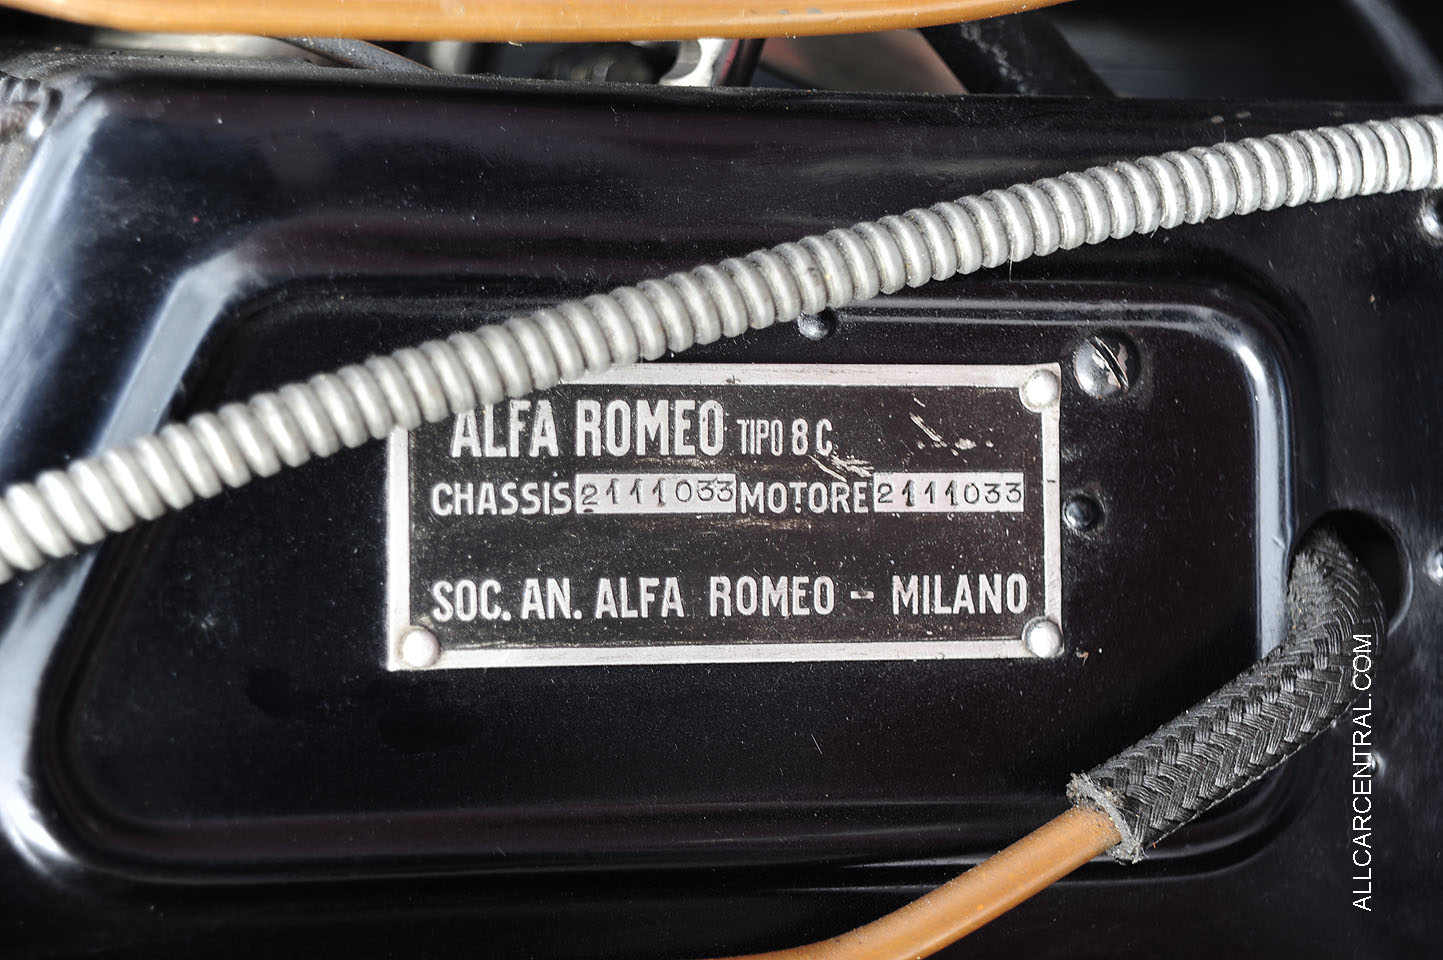  Alfa Romeo 8C 2300 sn-2111033 Mille Miglia Touring 1932 Front Axel No.2101023 Corte Madera Centennial CarShow 2016 FAN1521 